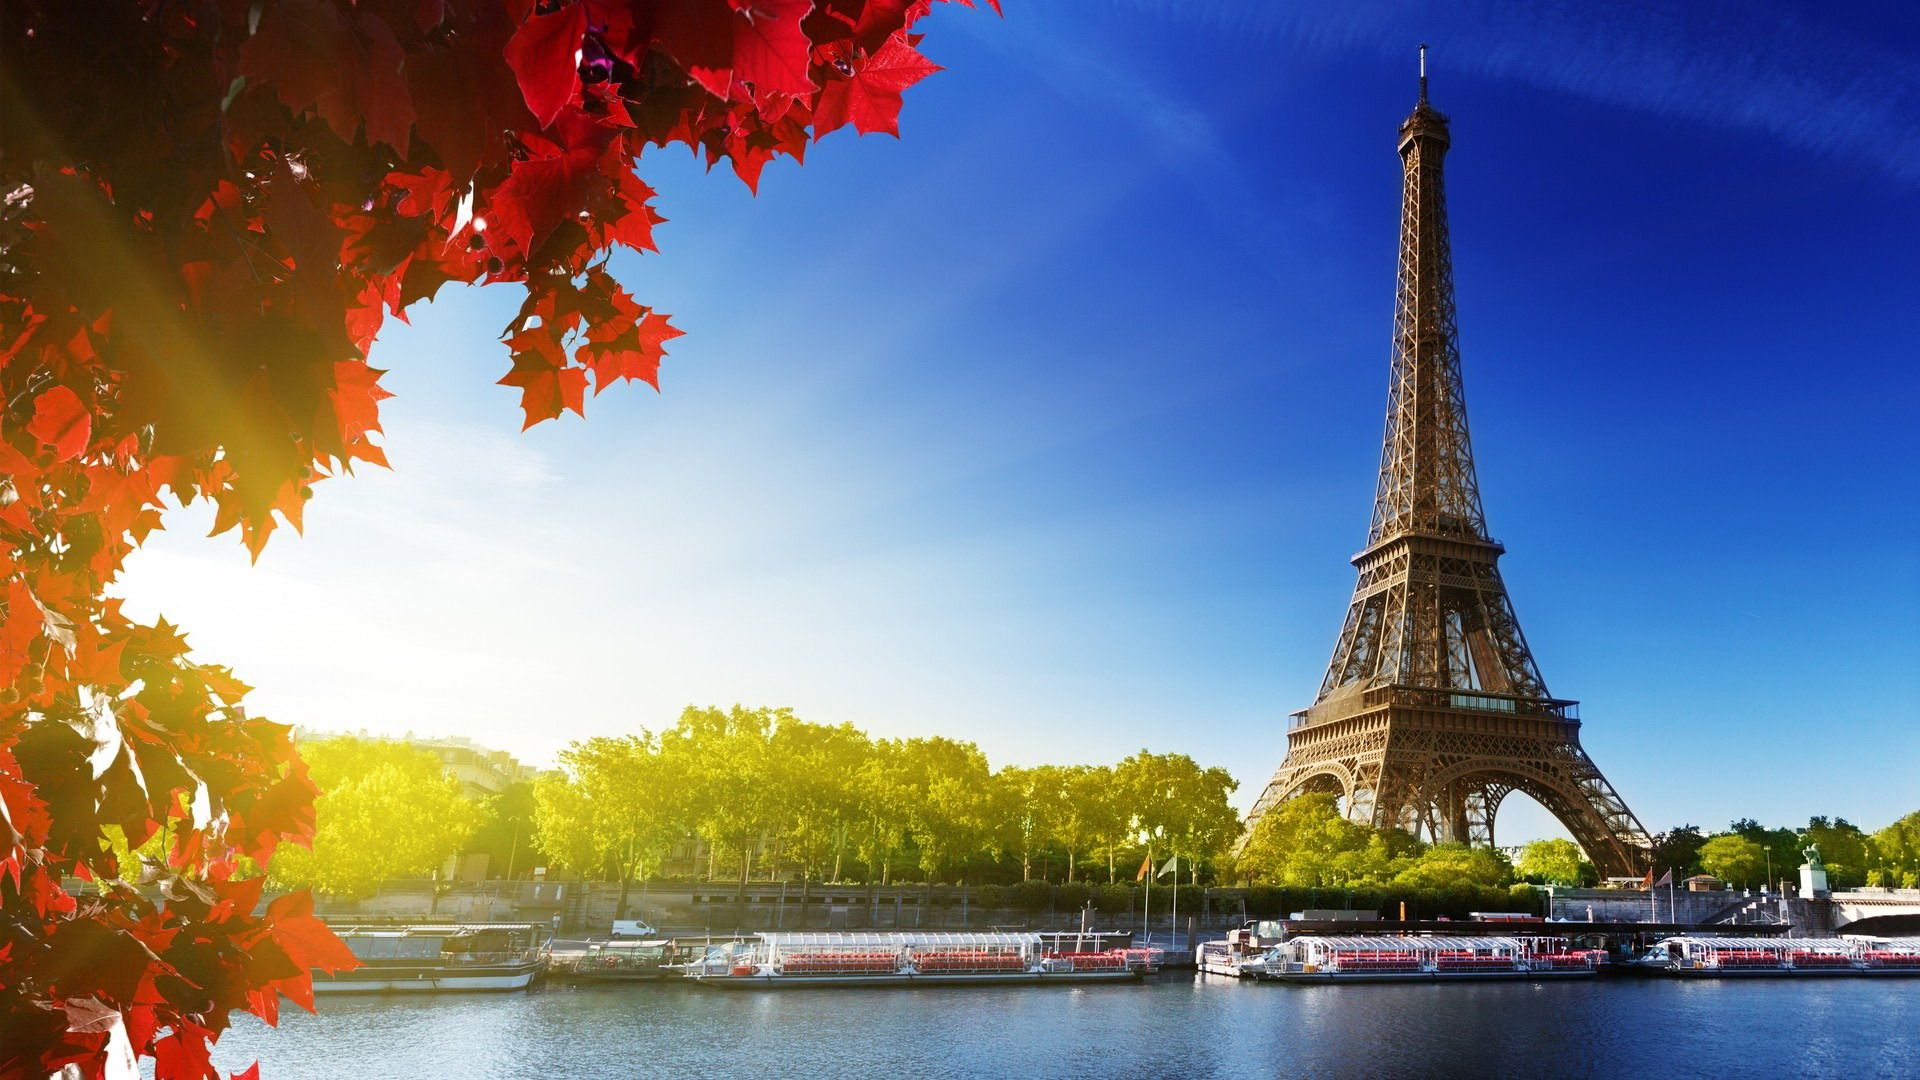 http://www.home-hunts.net/wp-content/uploads/2013/05/Eiffel-Tower-Paris-France-Autumn.jpg